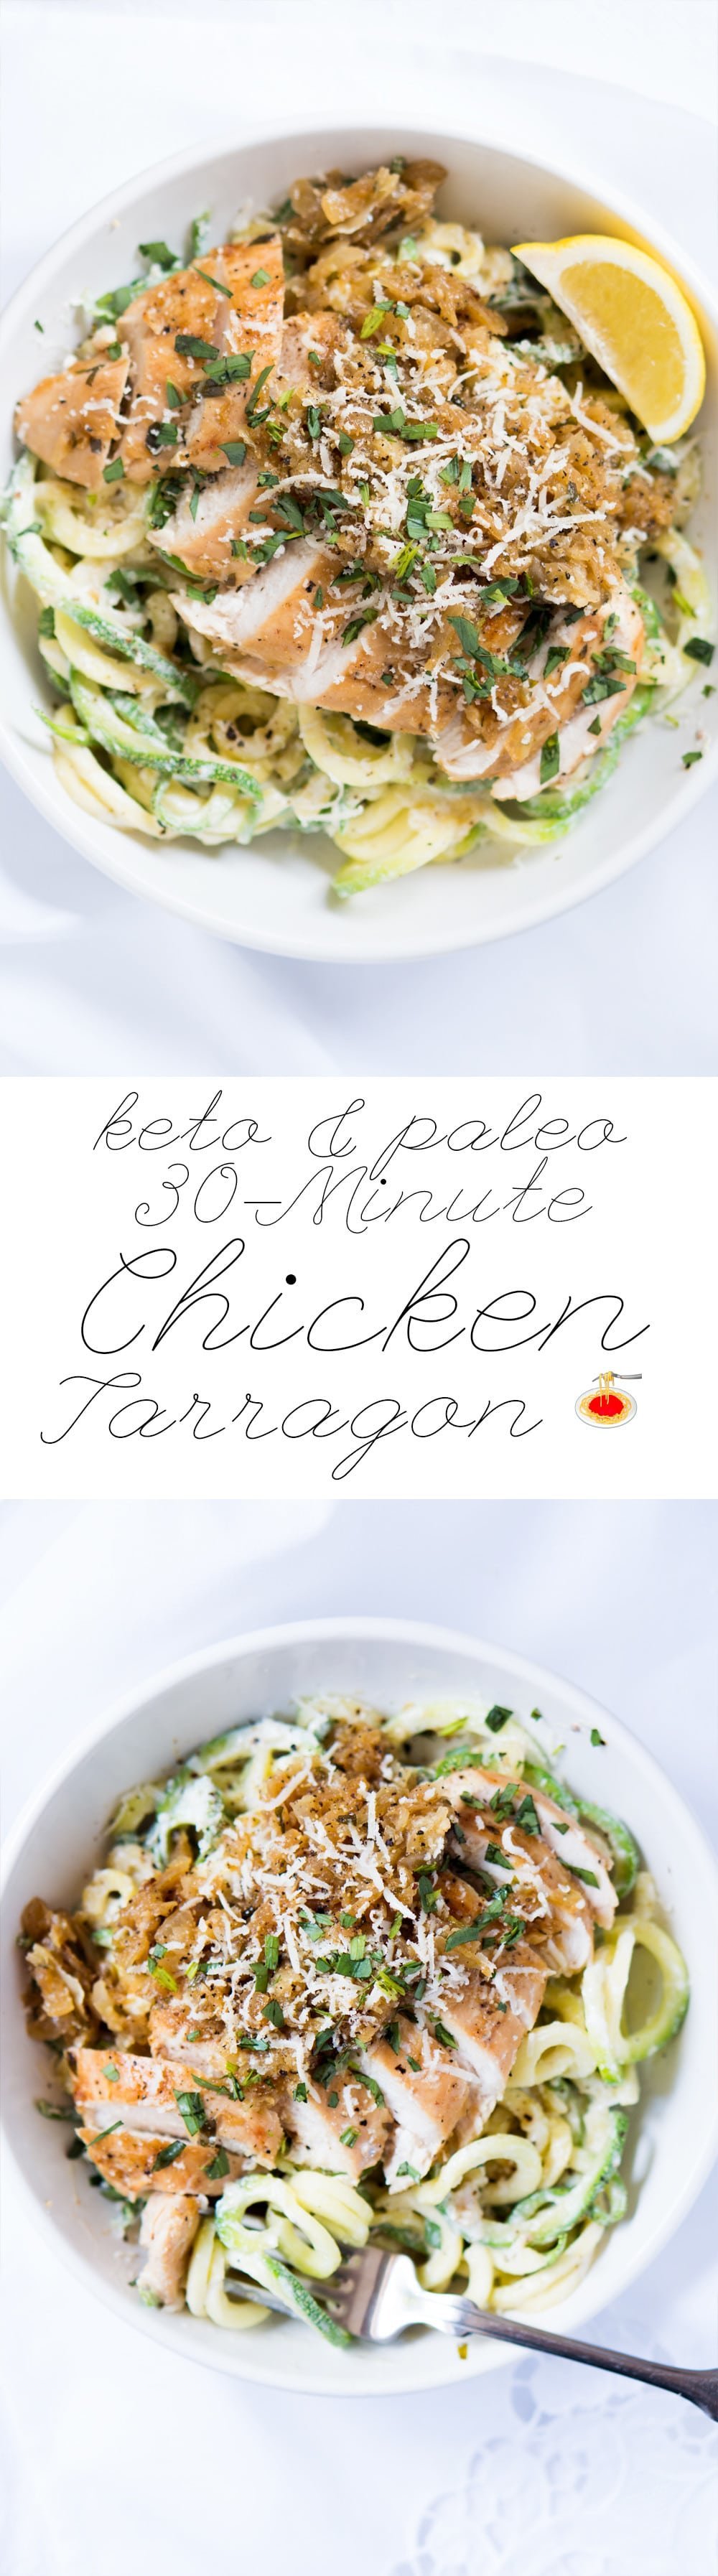 30-Minute Paleo & Keto Chicken Tarragon Zoodles 🍗